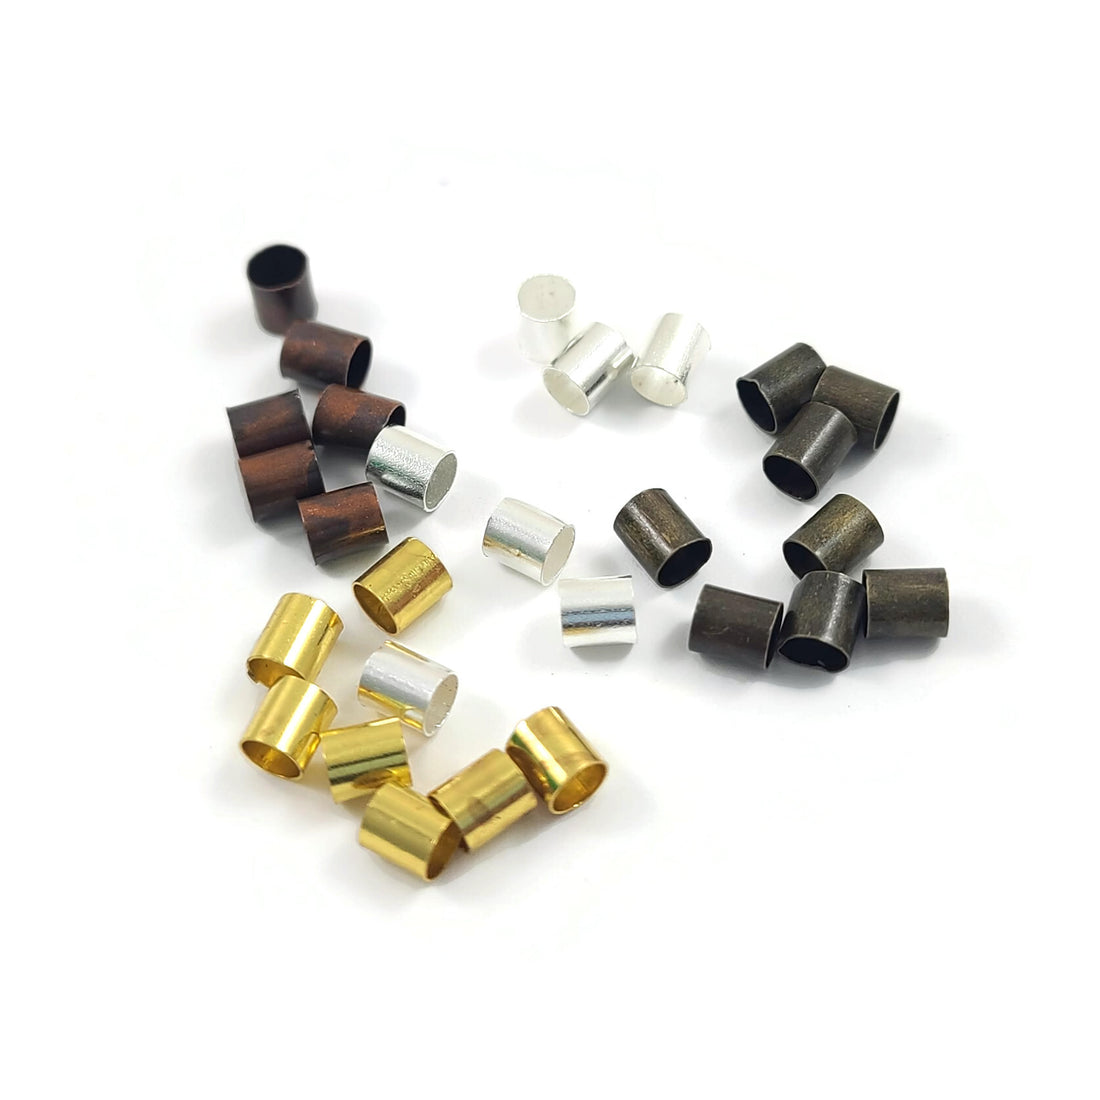 3mm crimp tube beads - Nickel, lead, and cadmium free